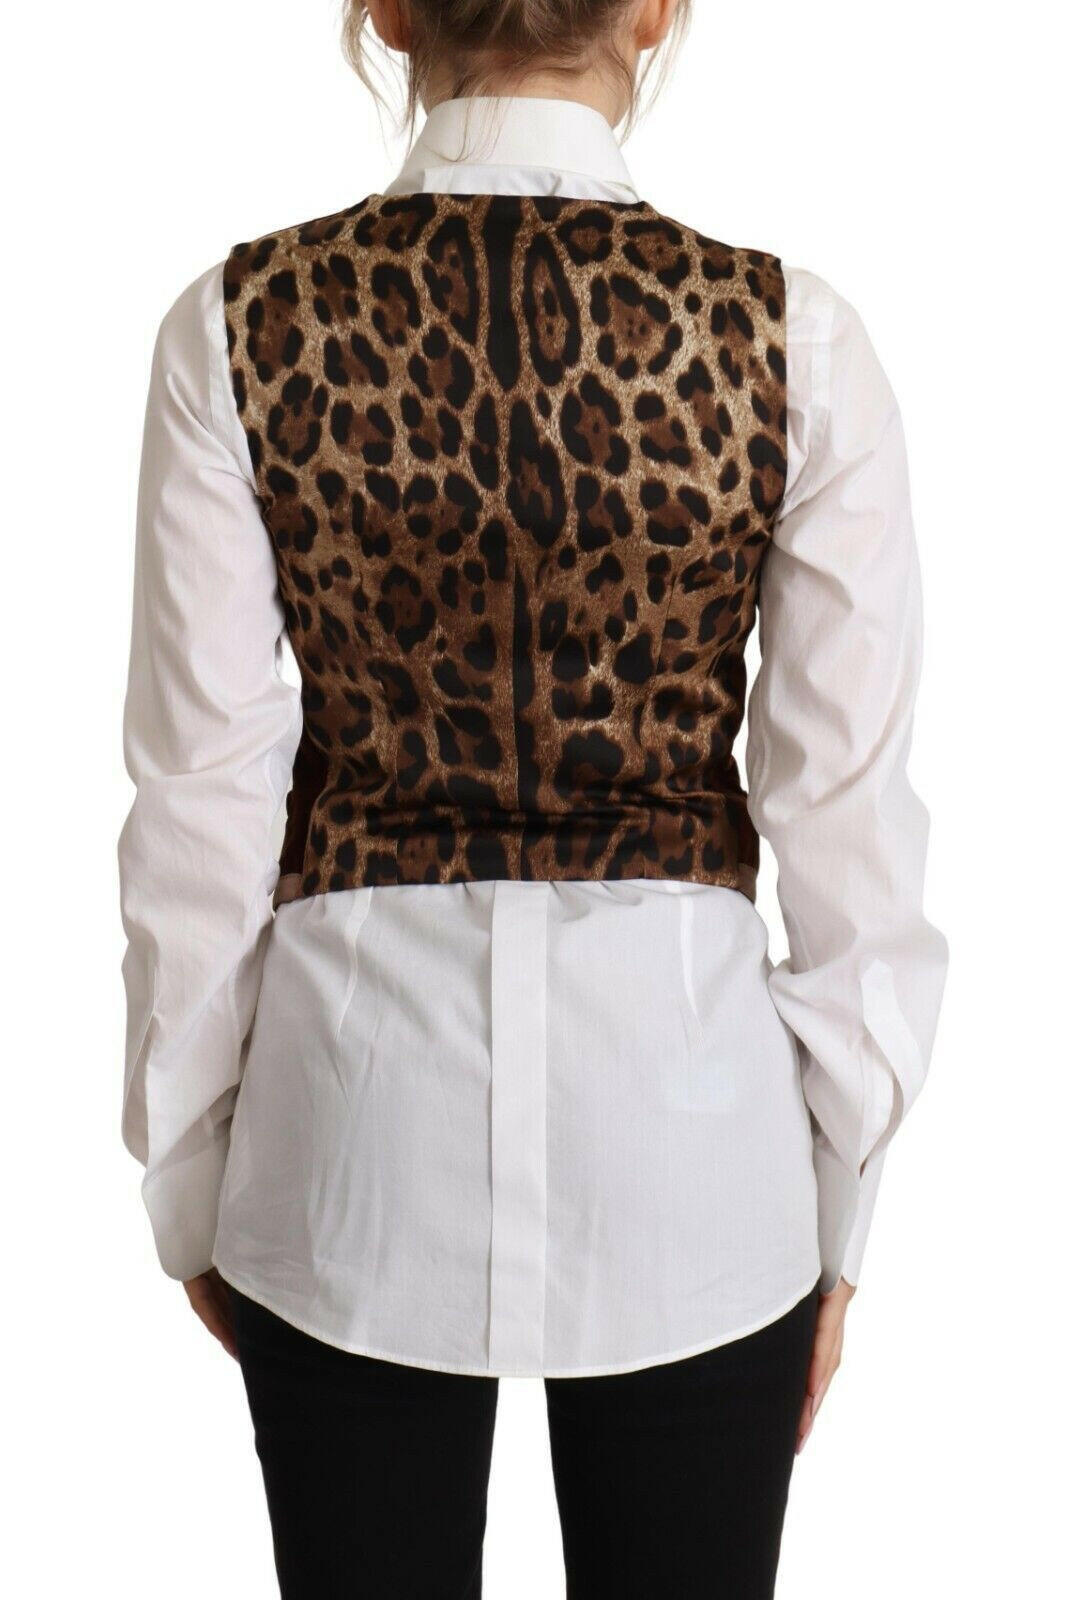 Dolce & Gabbana Brown Corduroy Leopard V-neck Sleeveless Vest Top - GENUINE AUTHENTIC BRAND LLC  